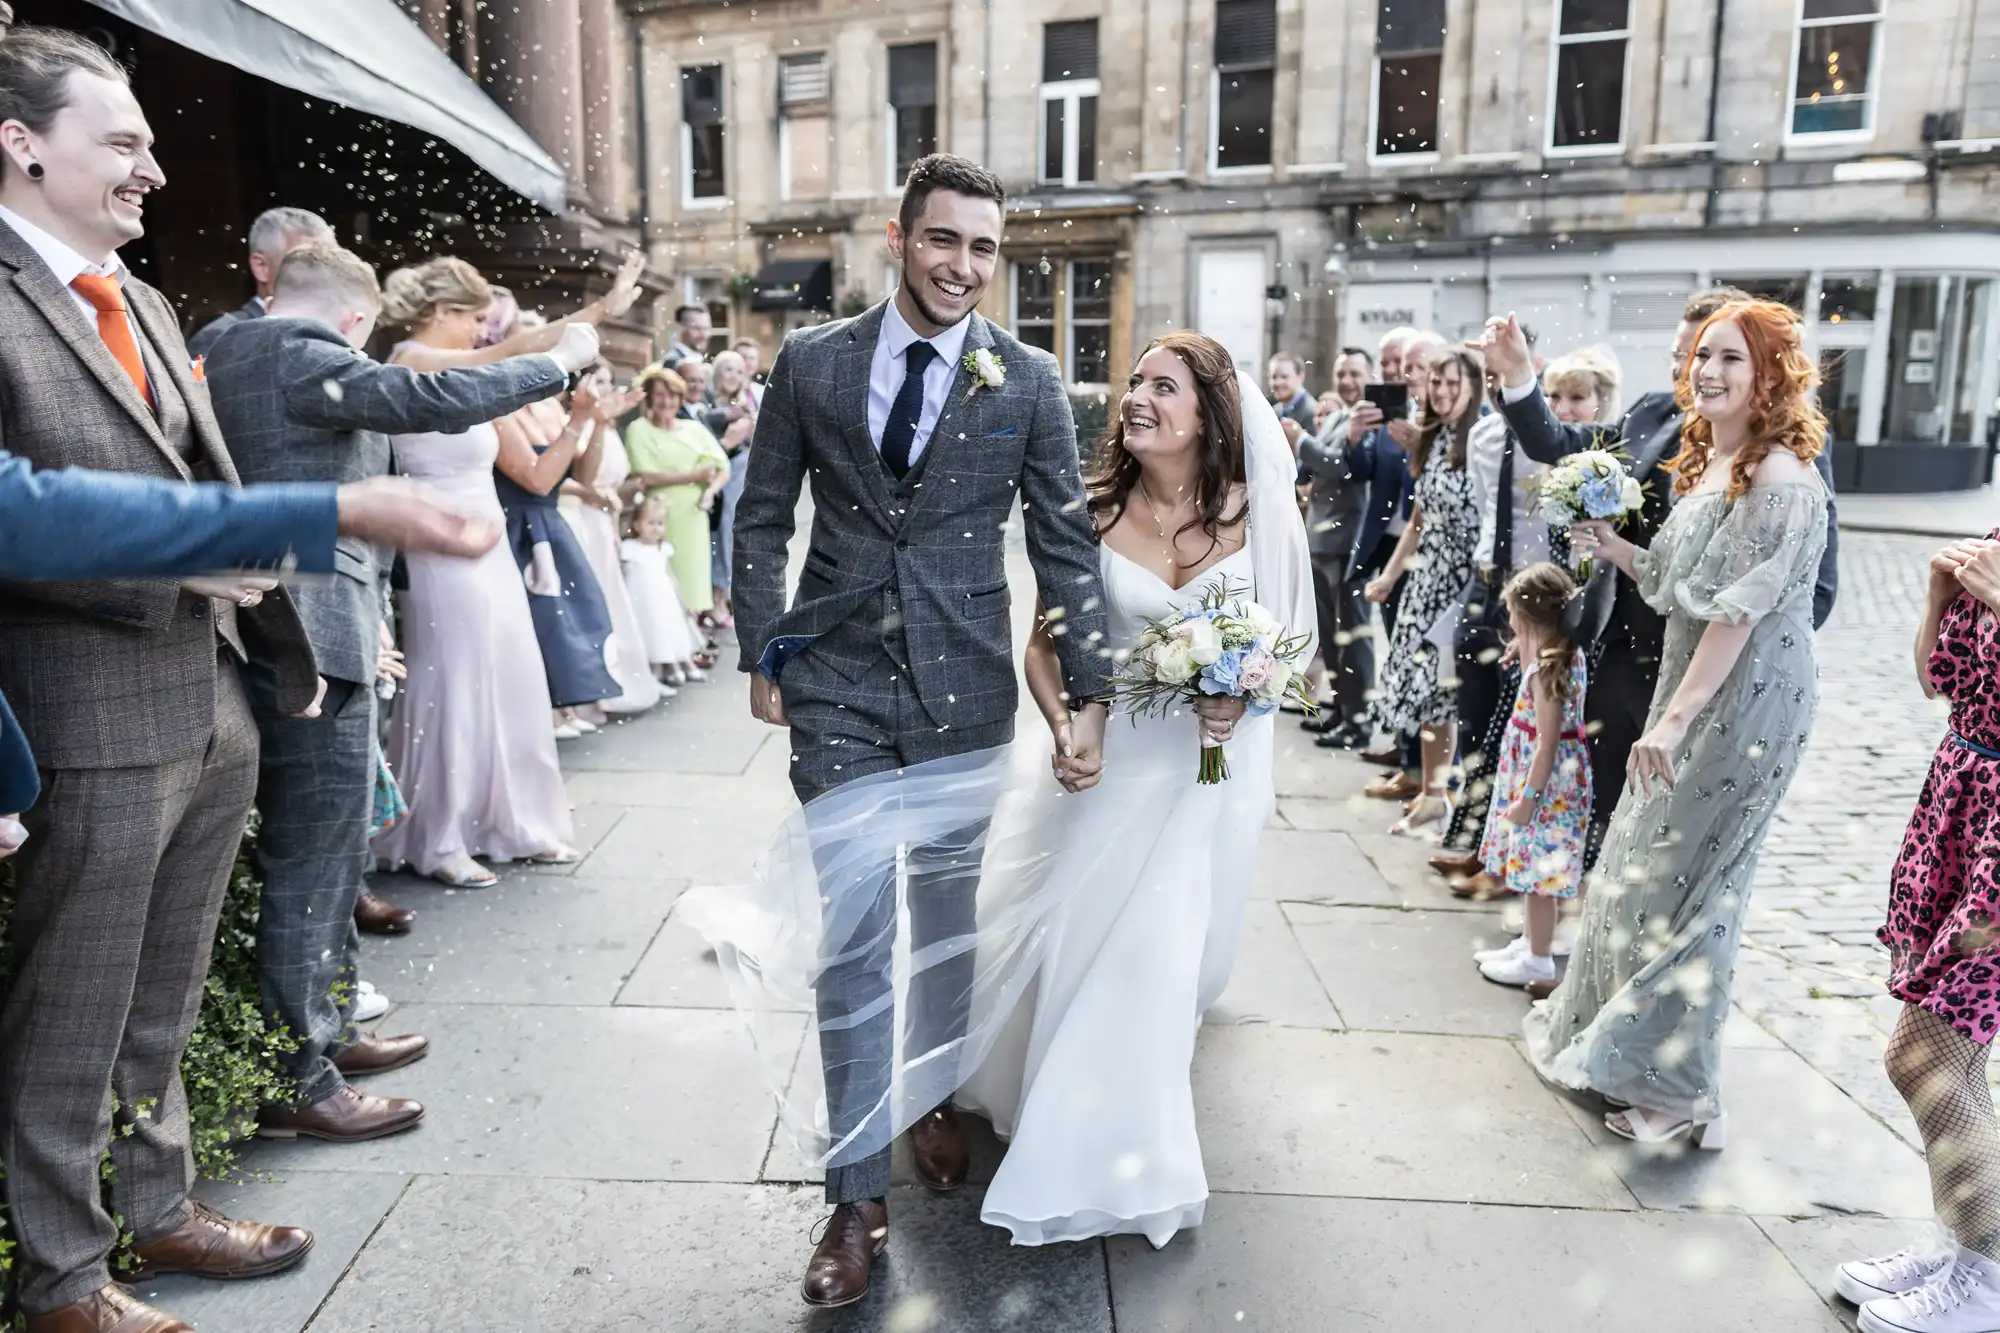 A newly married couple walks joyfully through a crowd throwing confetti on a city street.